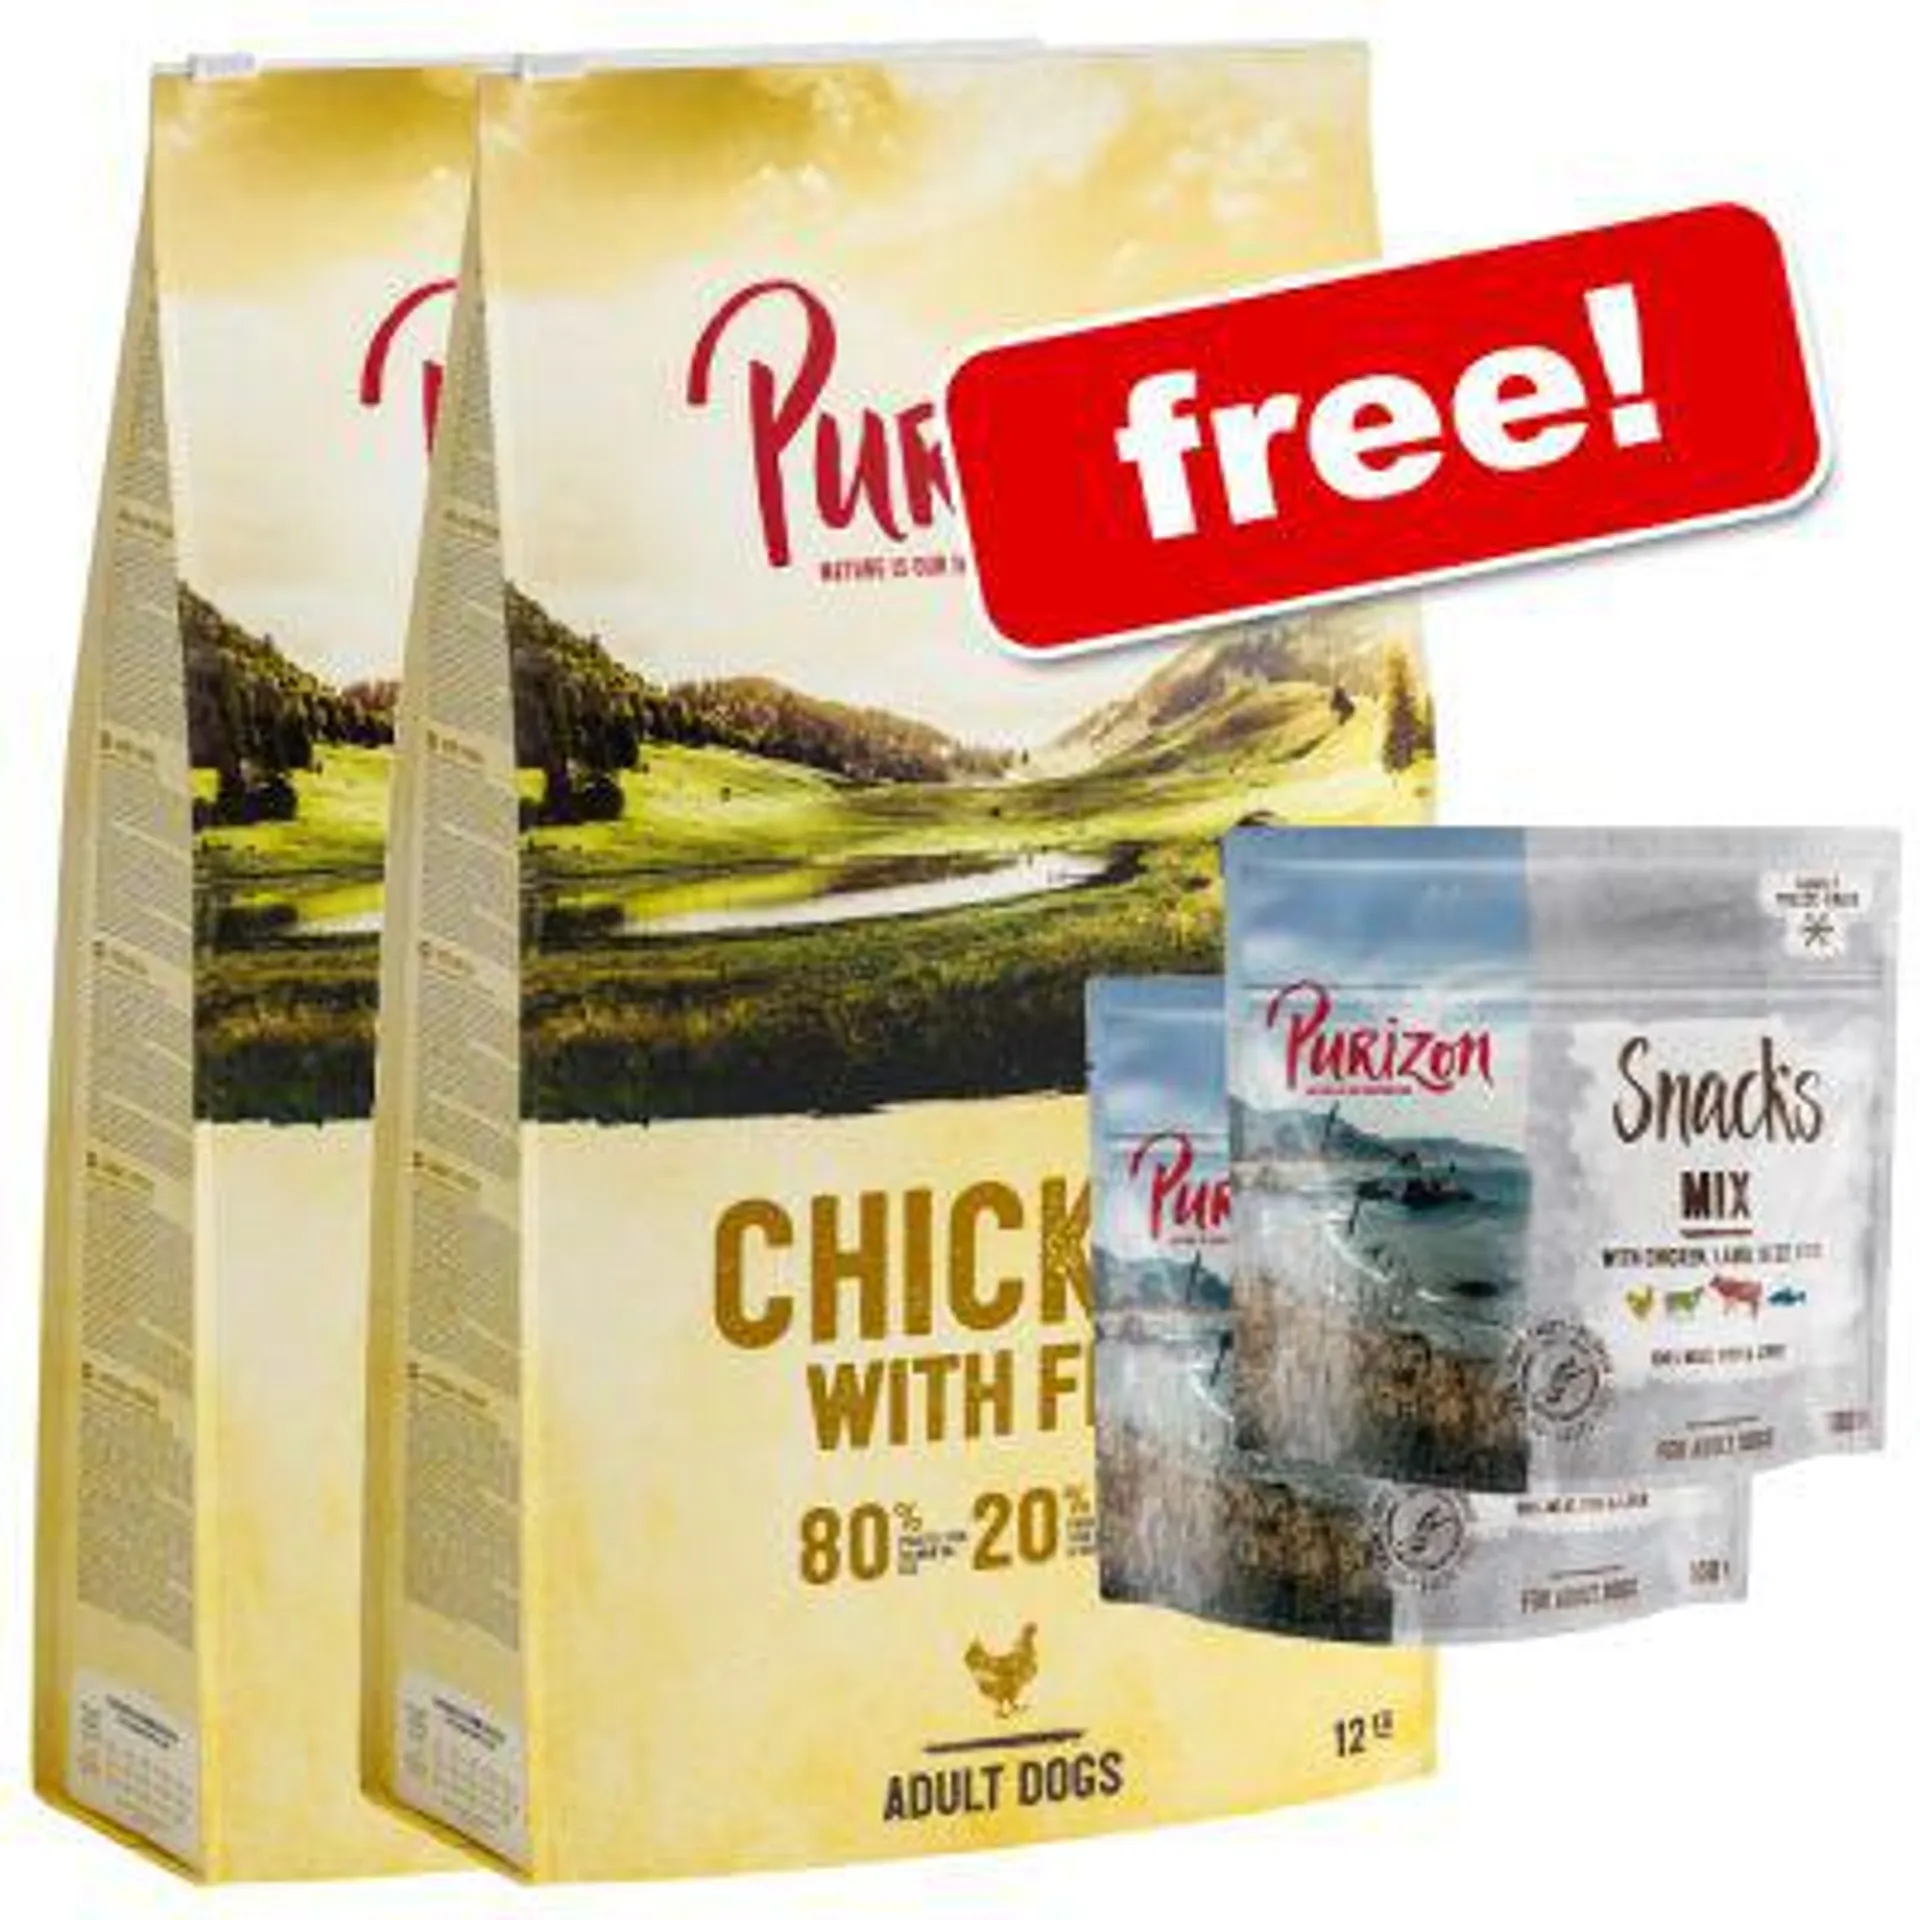 2 x 12kg Purizon Grain-Free Dry Dog Food + 2x Purizon Dog Snacks Free!*